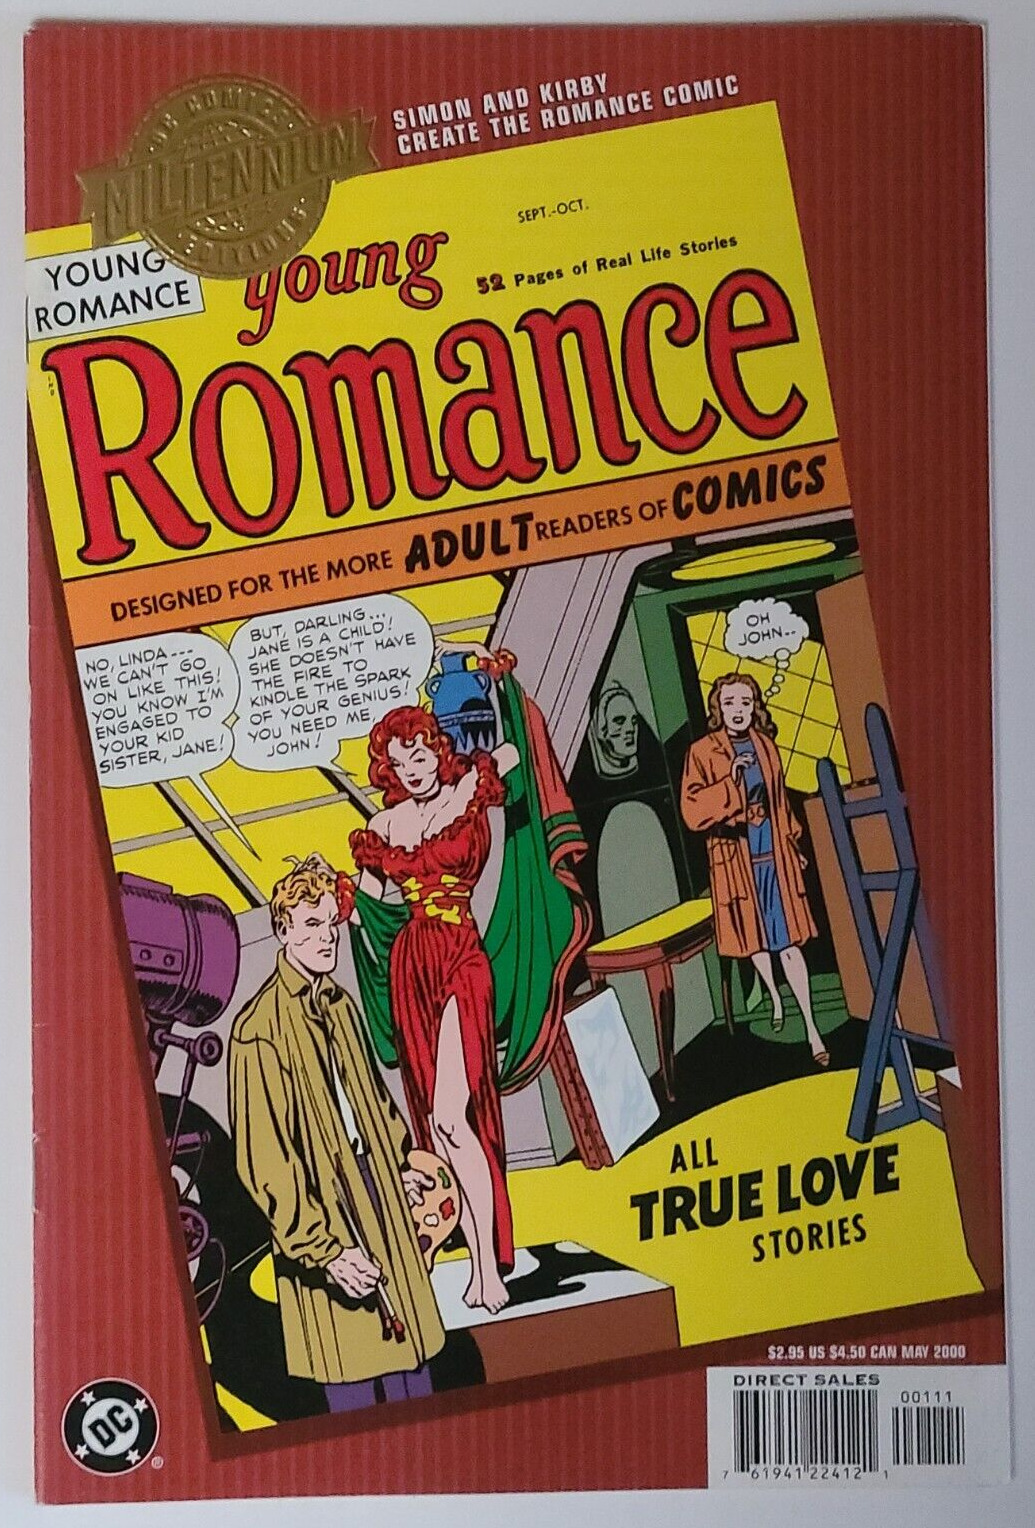 DC COMICS MILLENIUM EDITIONS (DC 2000) YOUNG ROMANCE #1 (DC 1947) SIMON & KIRBY